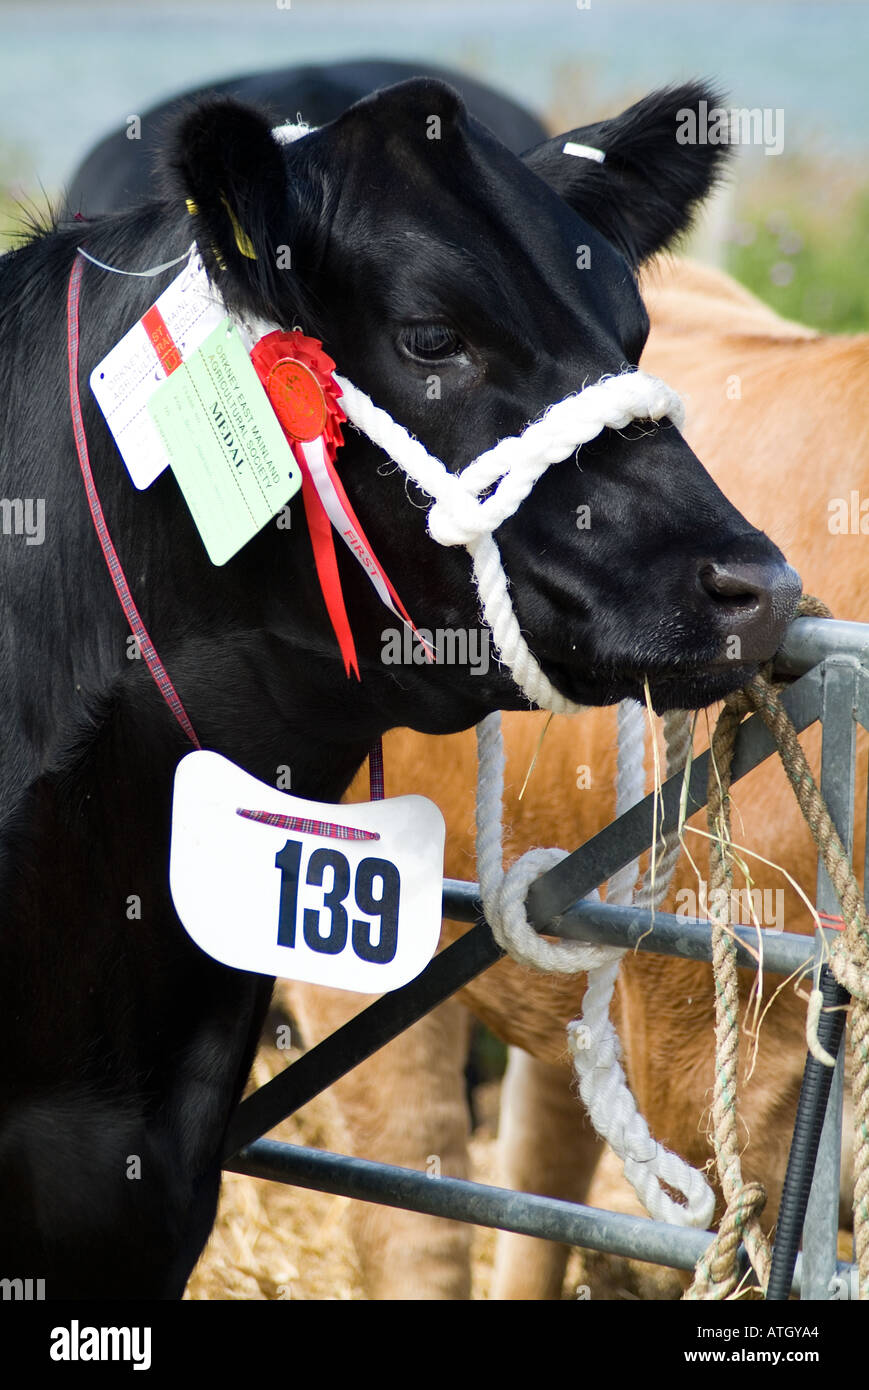 dh Aberdeen Angus vaches UK Black champion vache at Scottish Agricultural show Orkney agriculture royaume-uni pedigree animaux d'élevage fermer En Écosse Banque D'Images